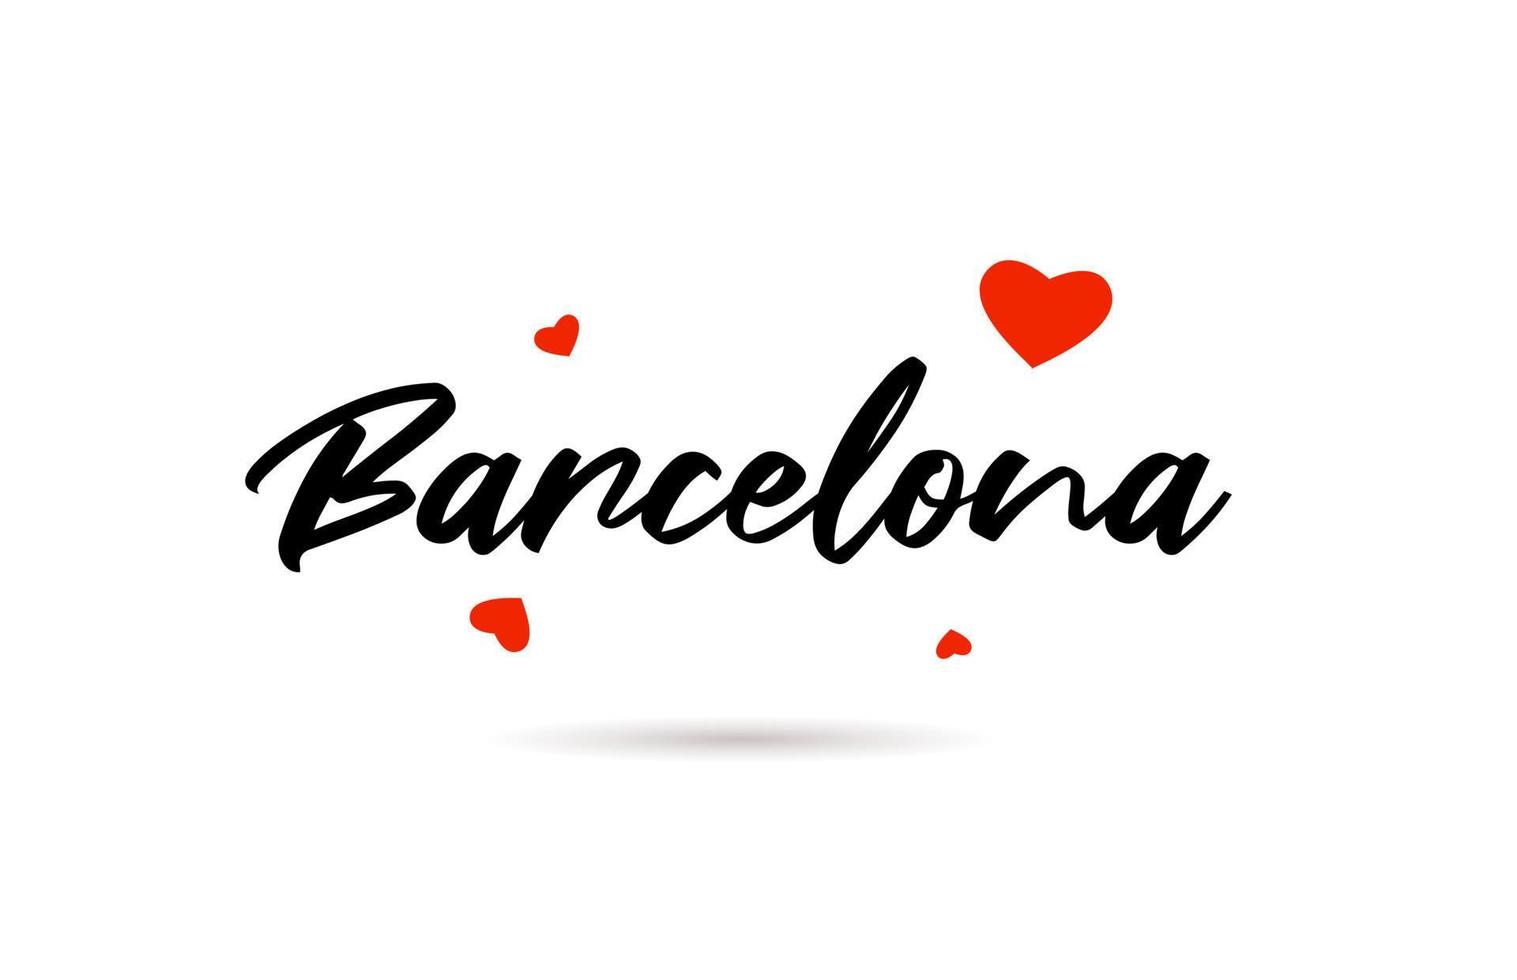 Barcelona handwritten city typography text with love heart vector